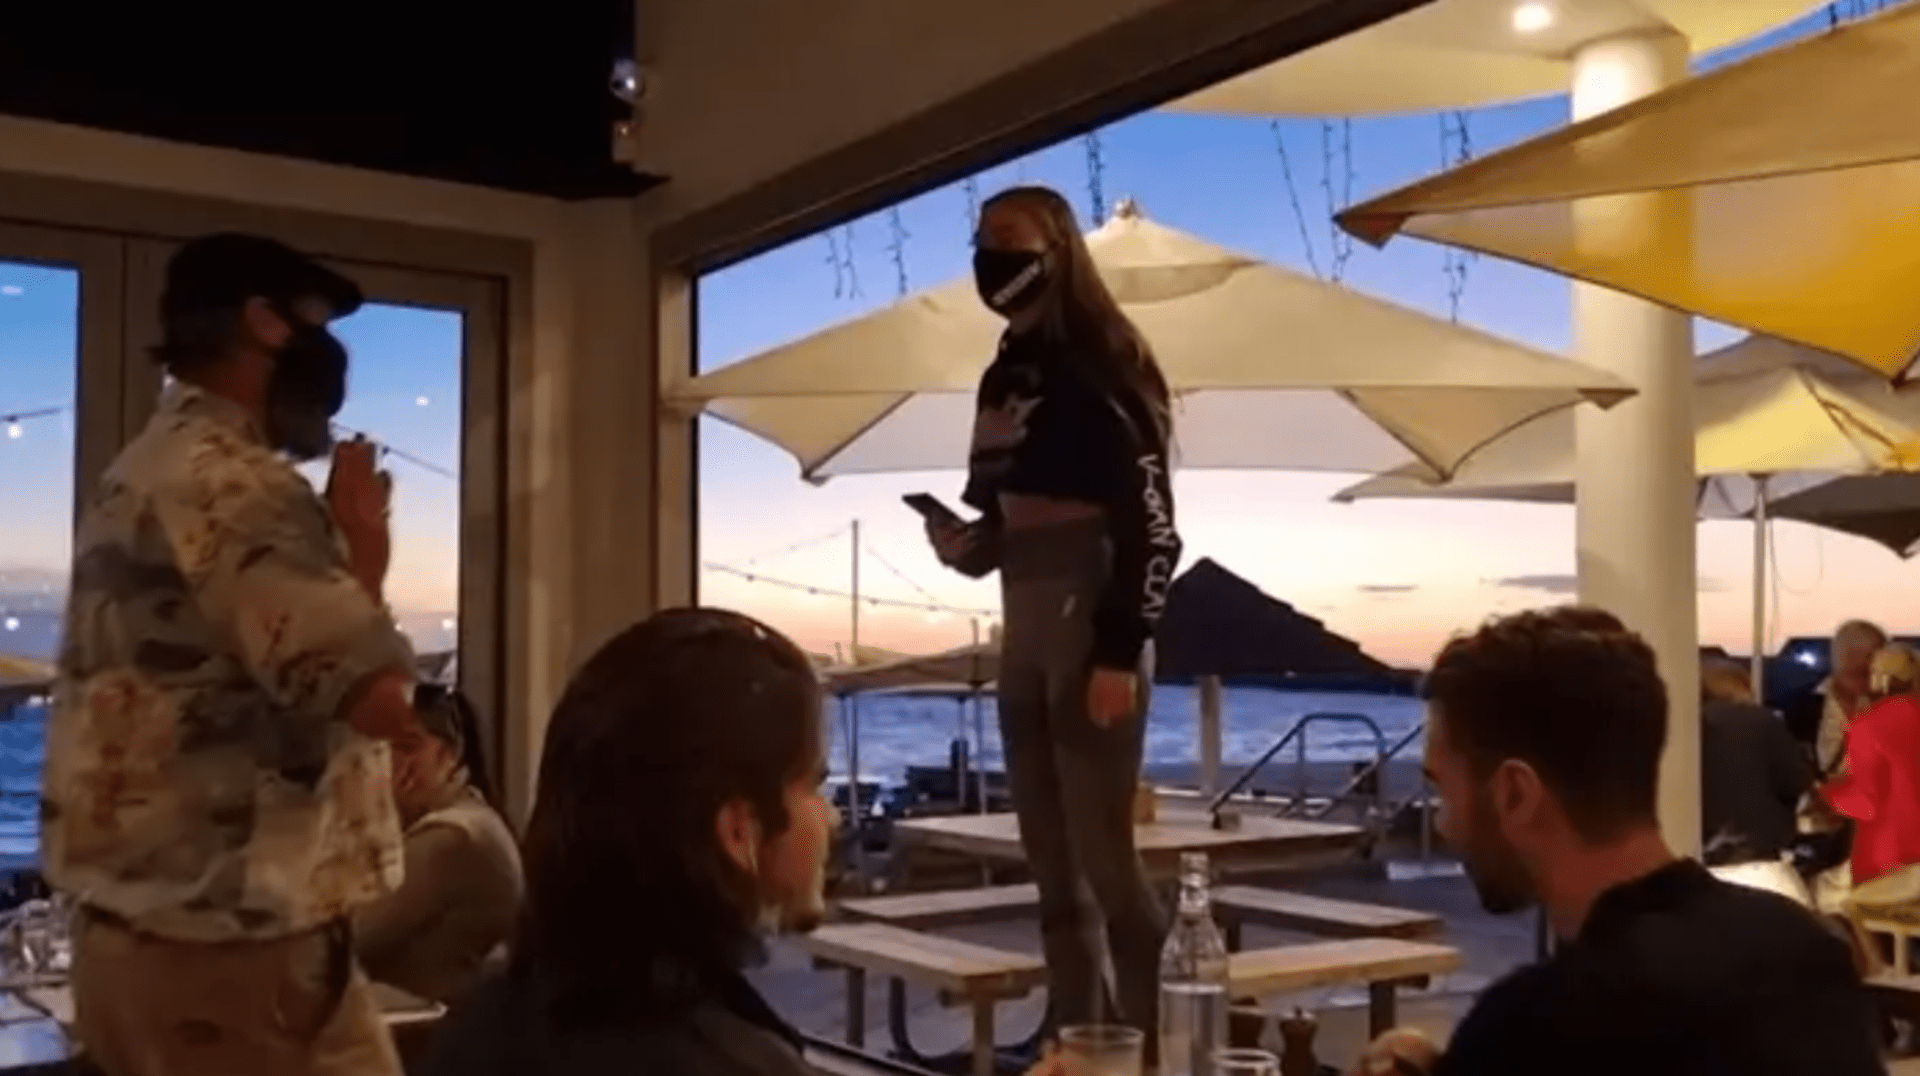 Veganka protestovala v restauraci s mořskými plody.